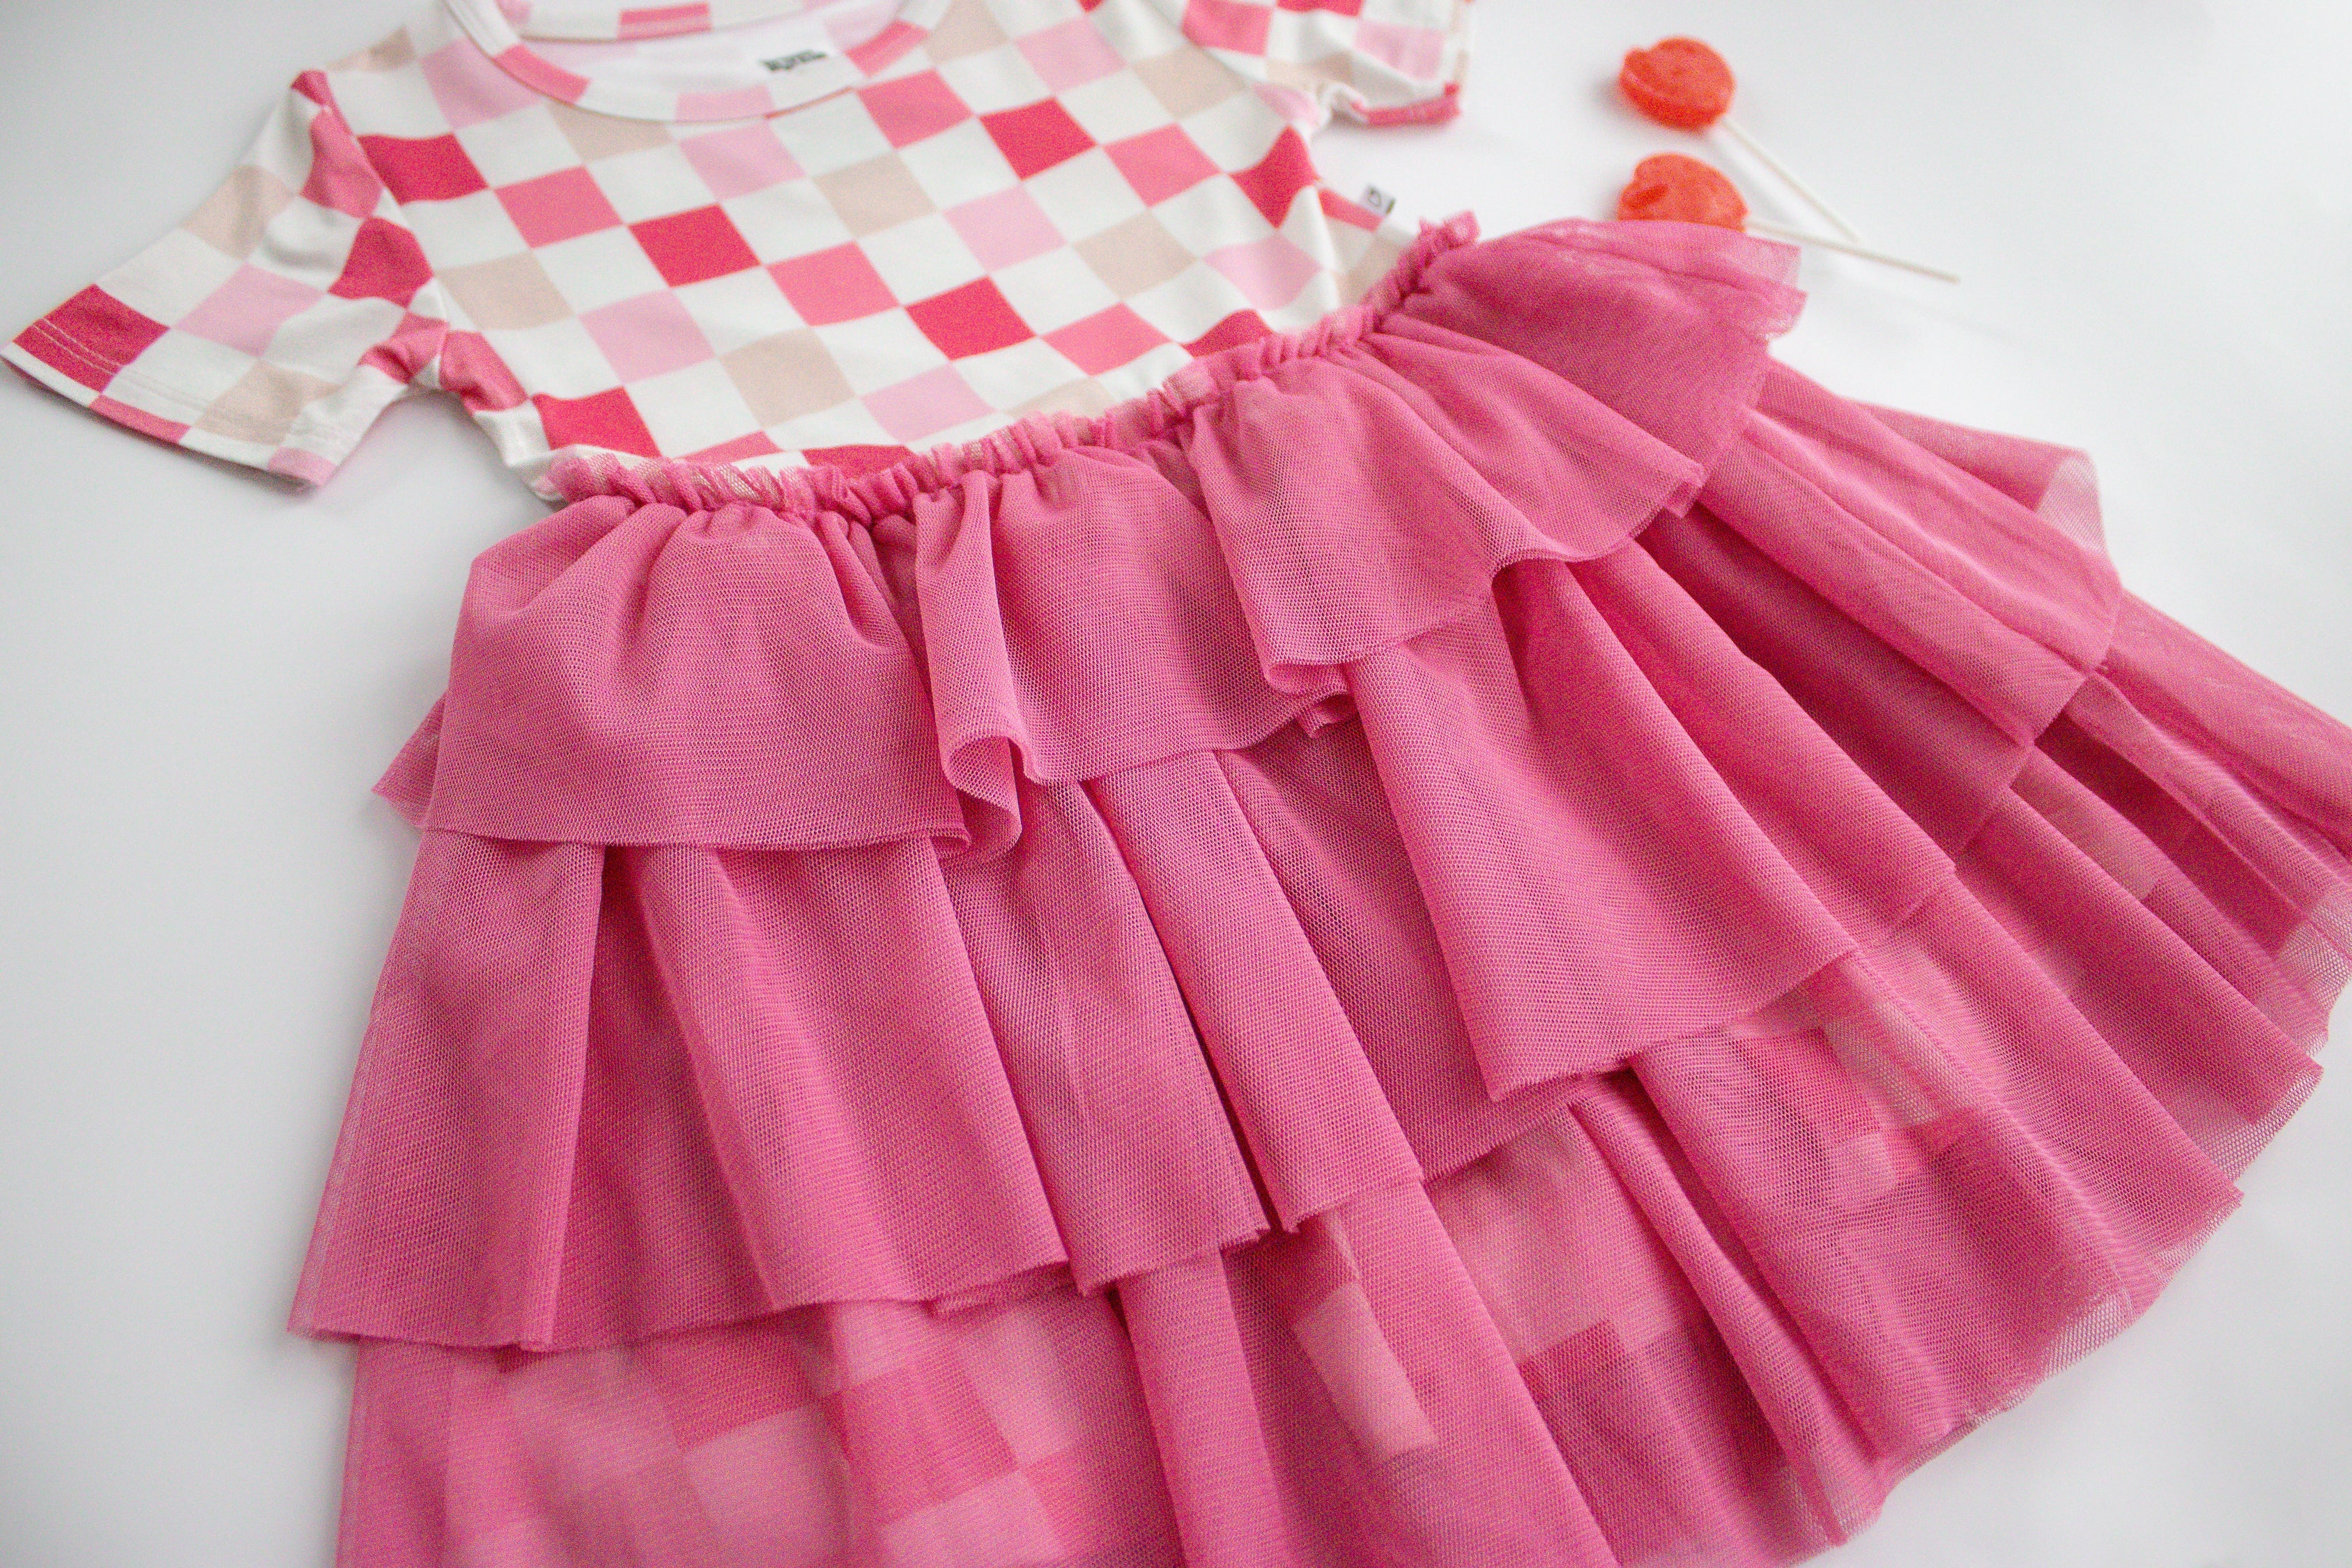 Dreamy Pink Checkers Dream Tutu Dress